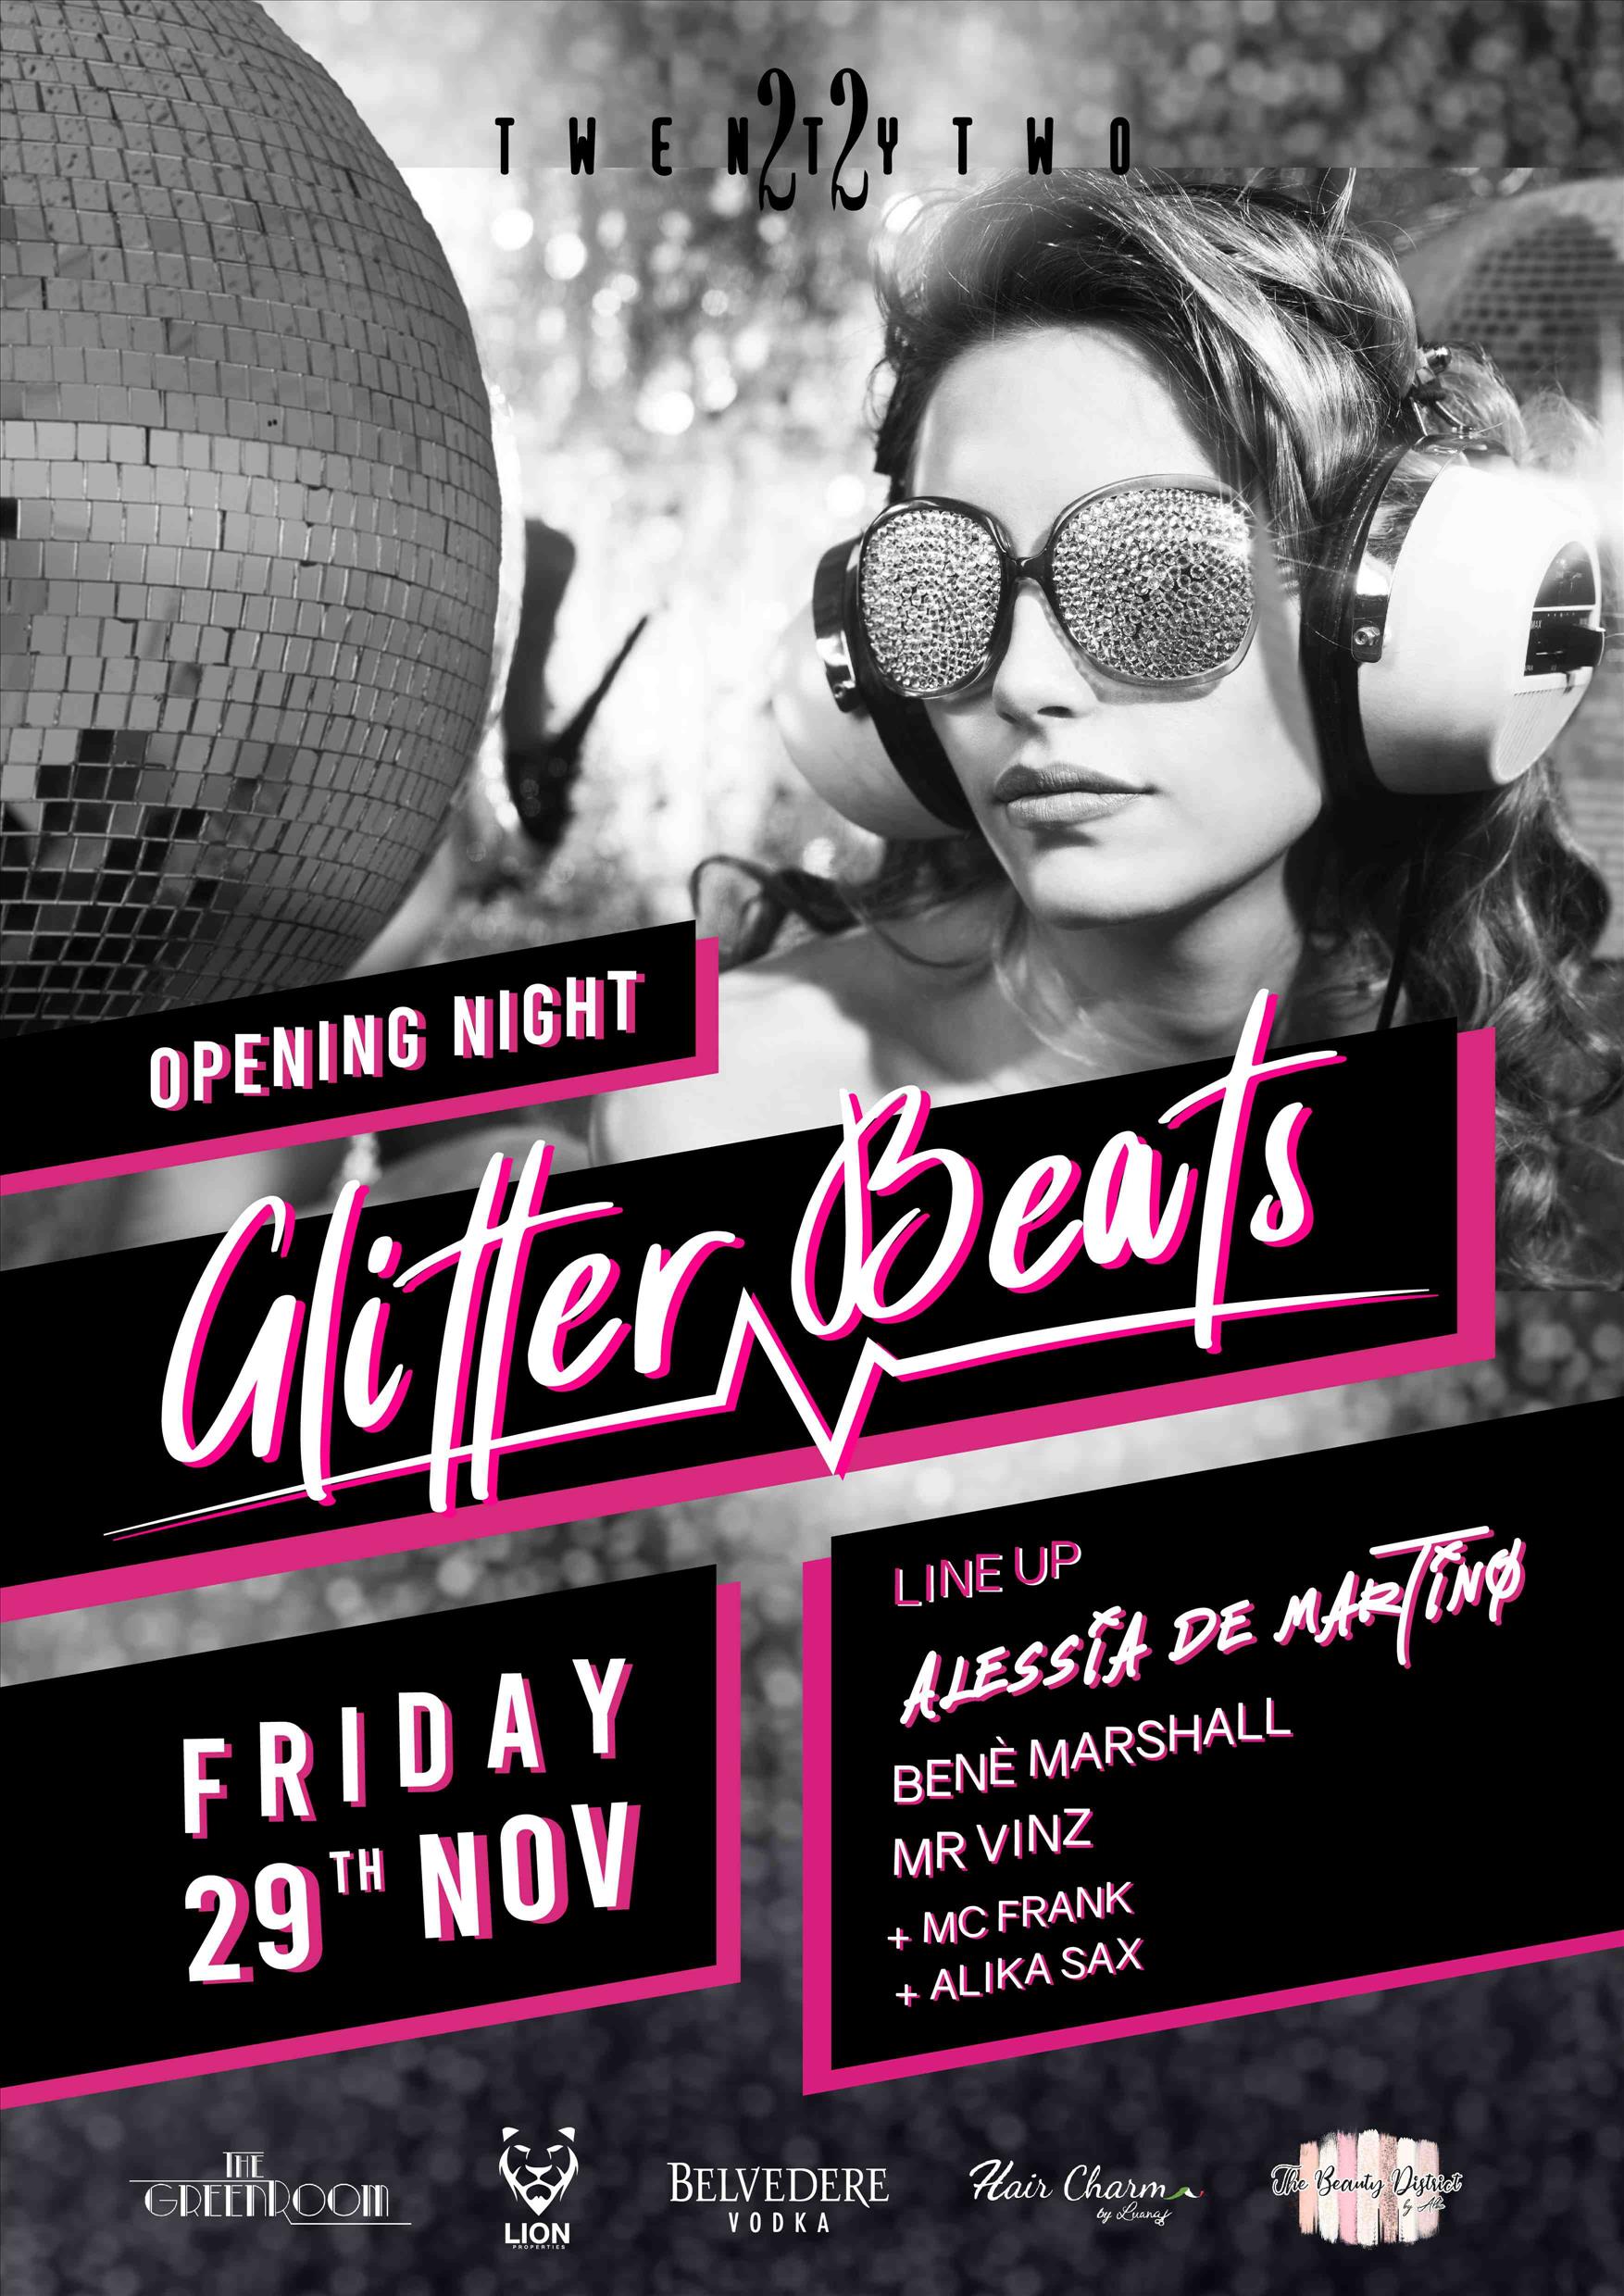 GLITTER BEATS OPENING NIGHT AT CLUB TWENTYTWO! poster